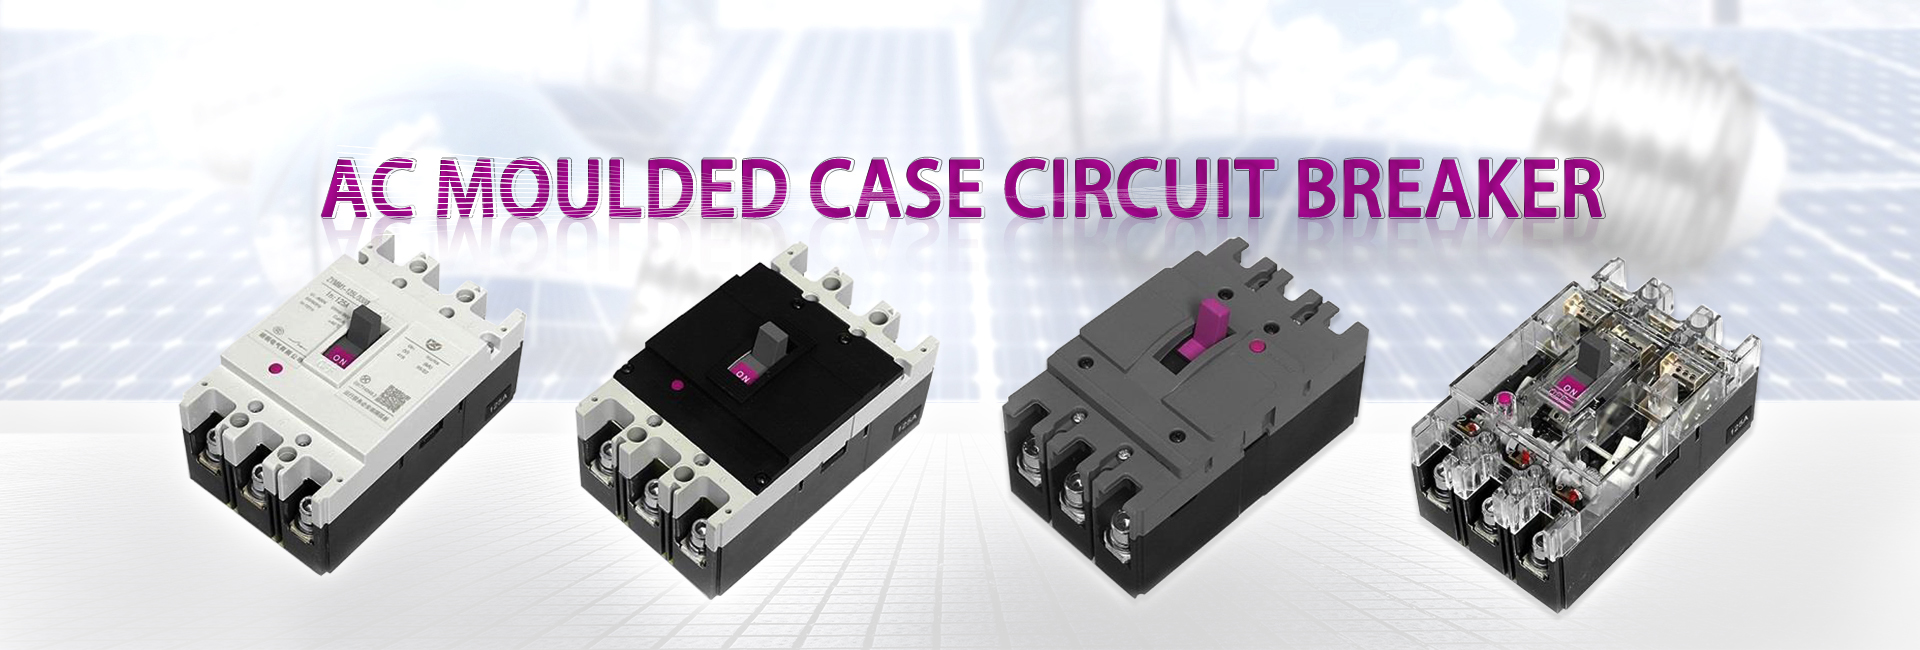 MCCB / Moulded Case Circuit Breaker